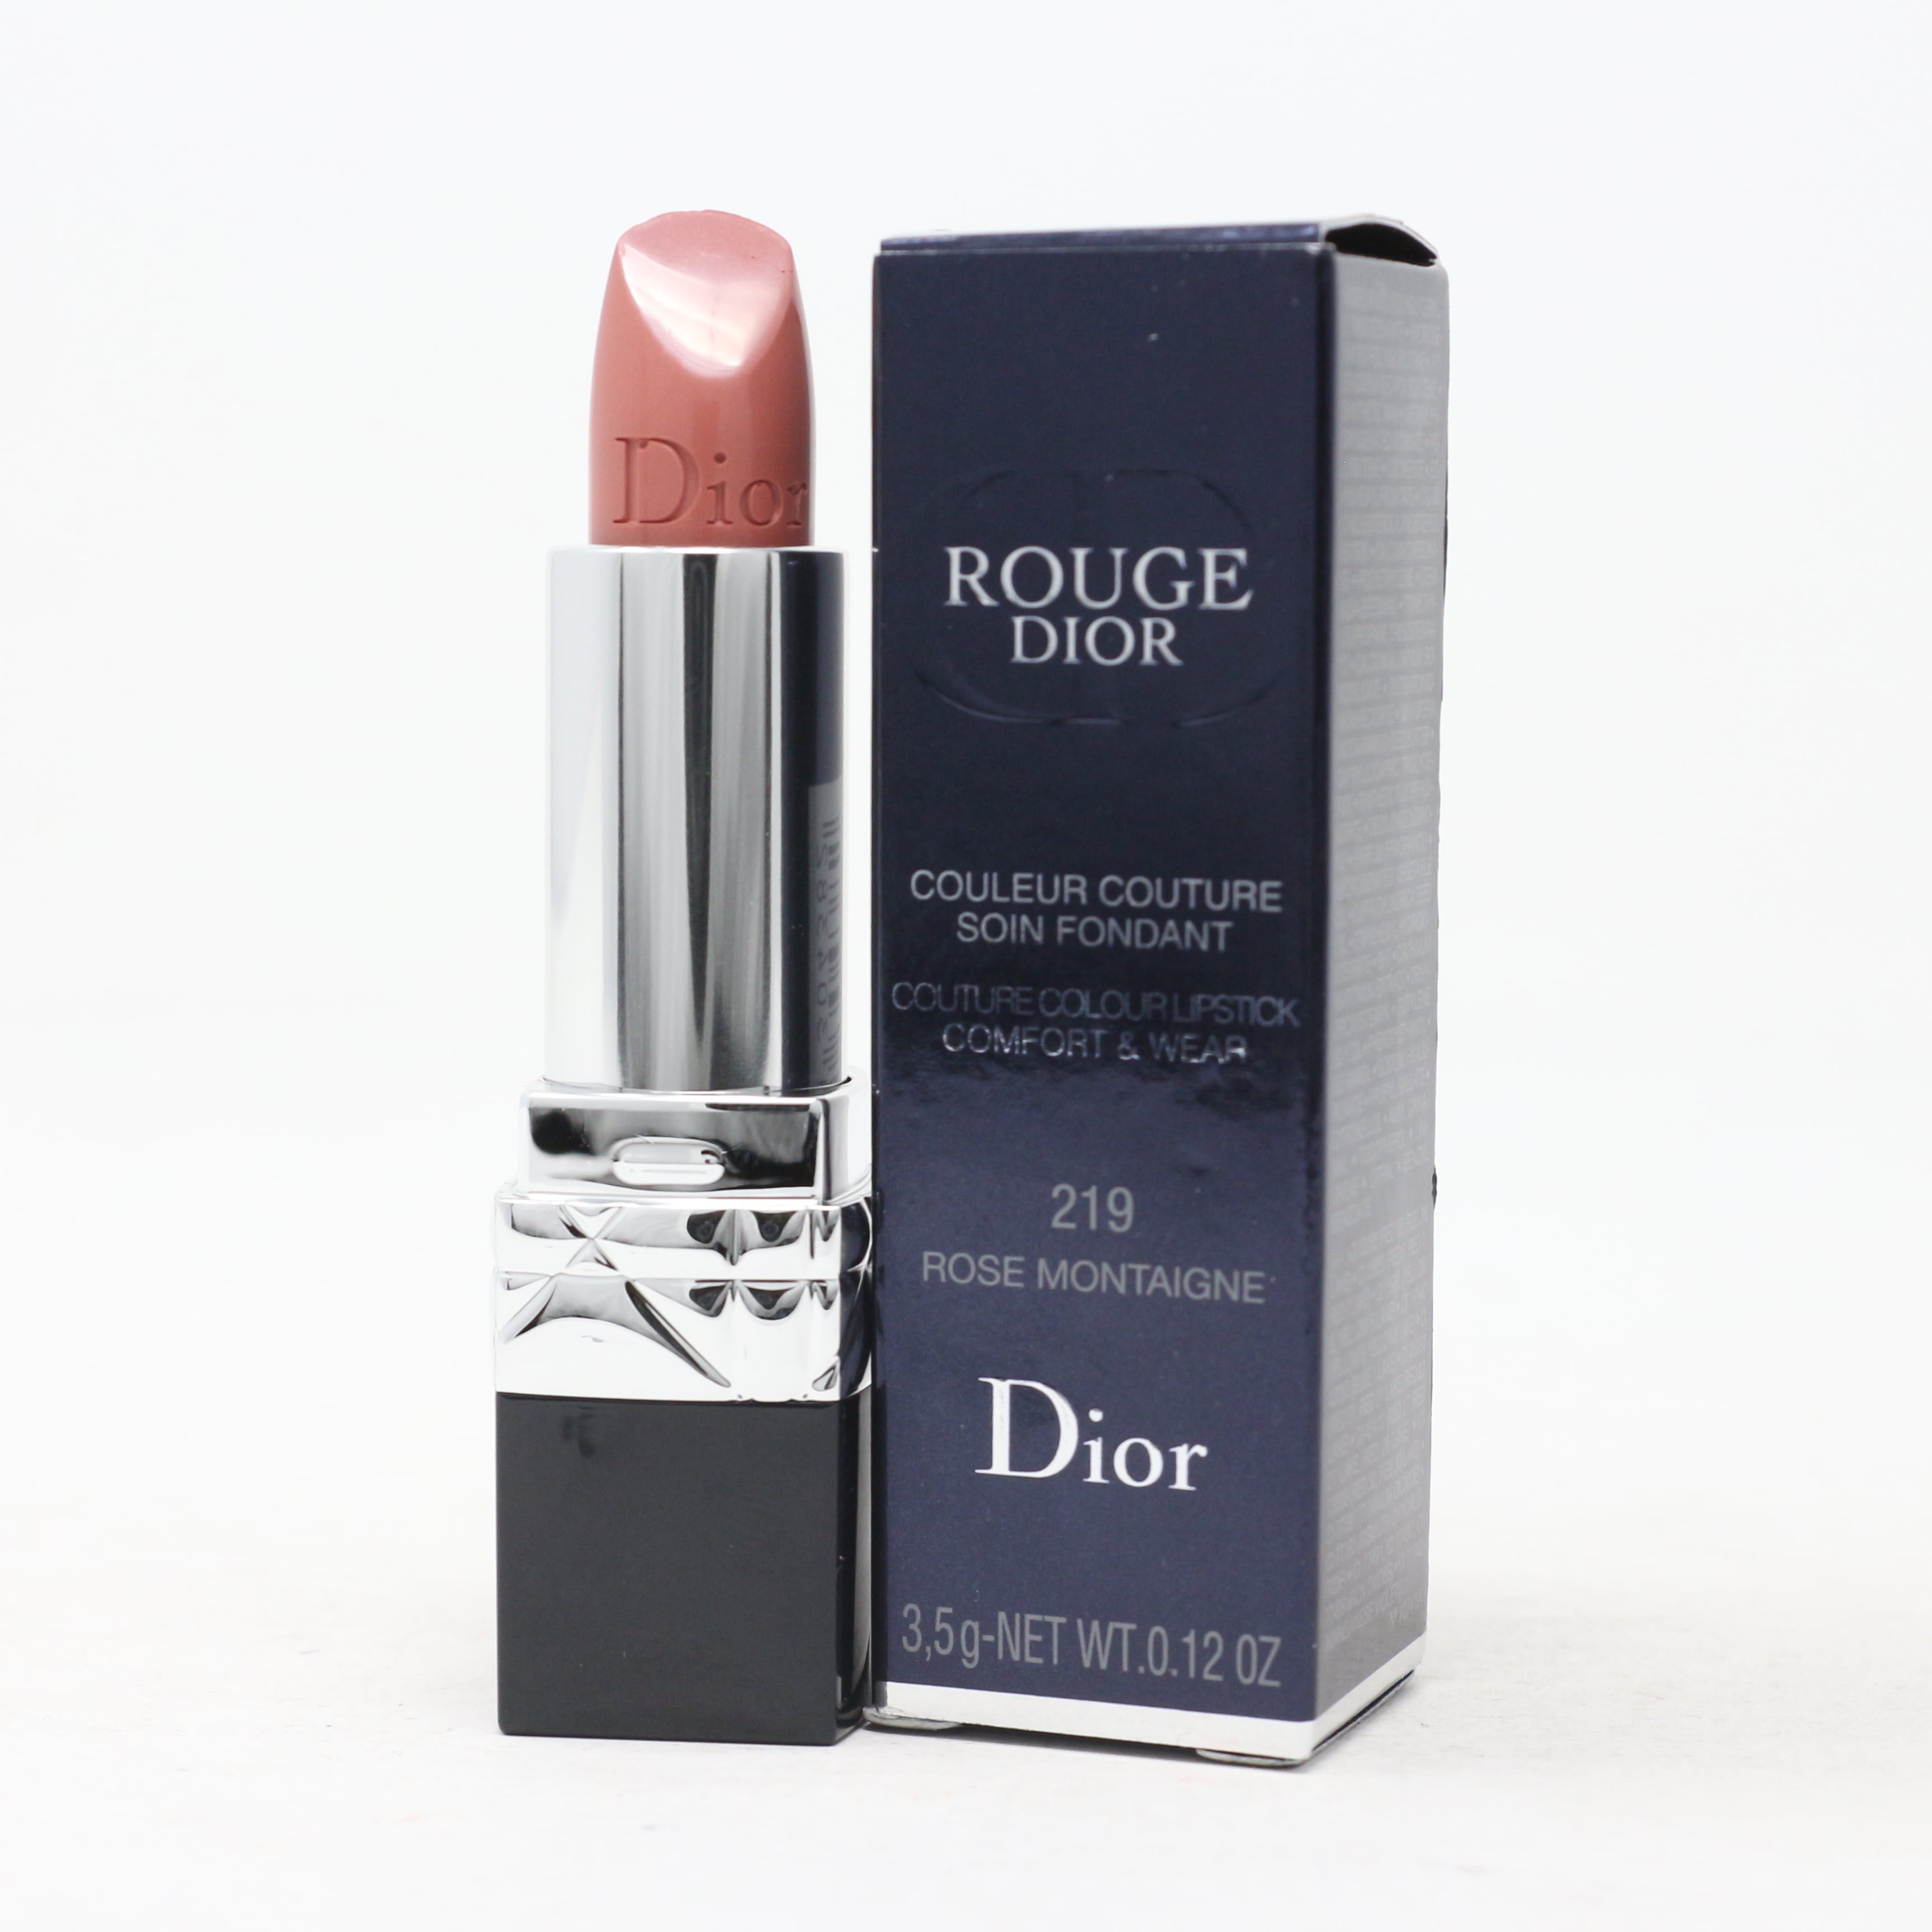 dior lipstick 344